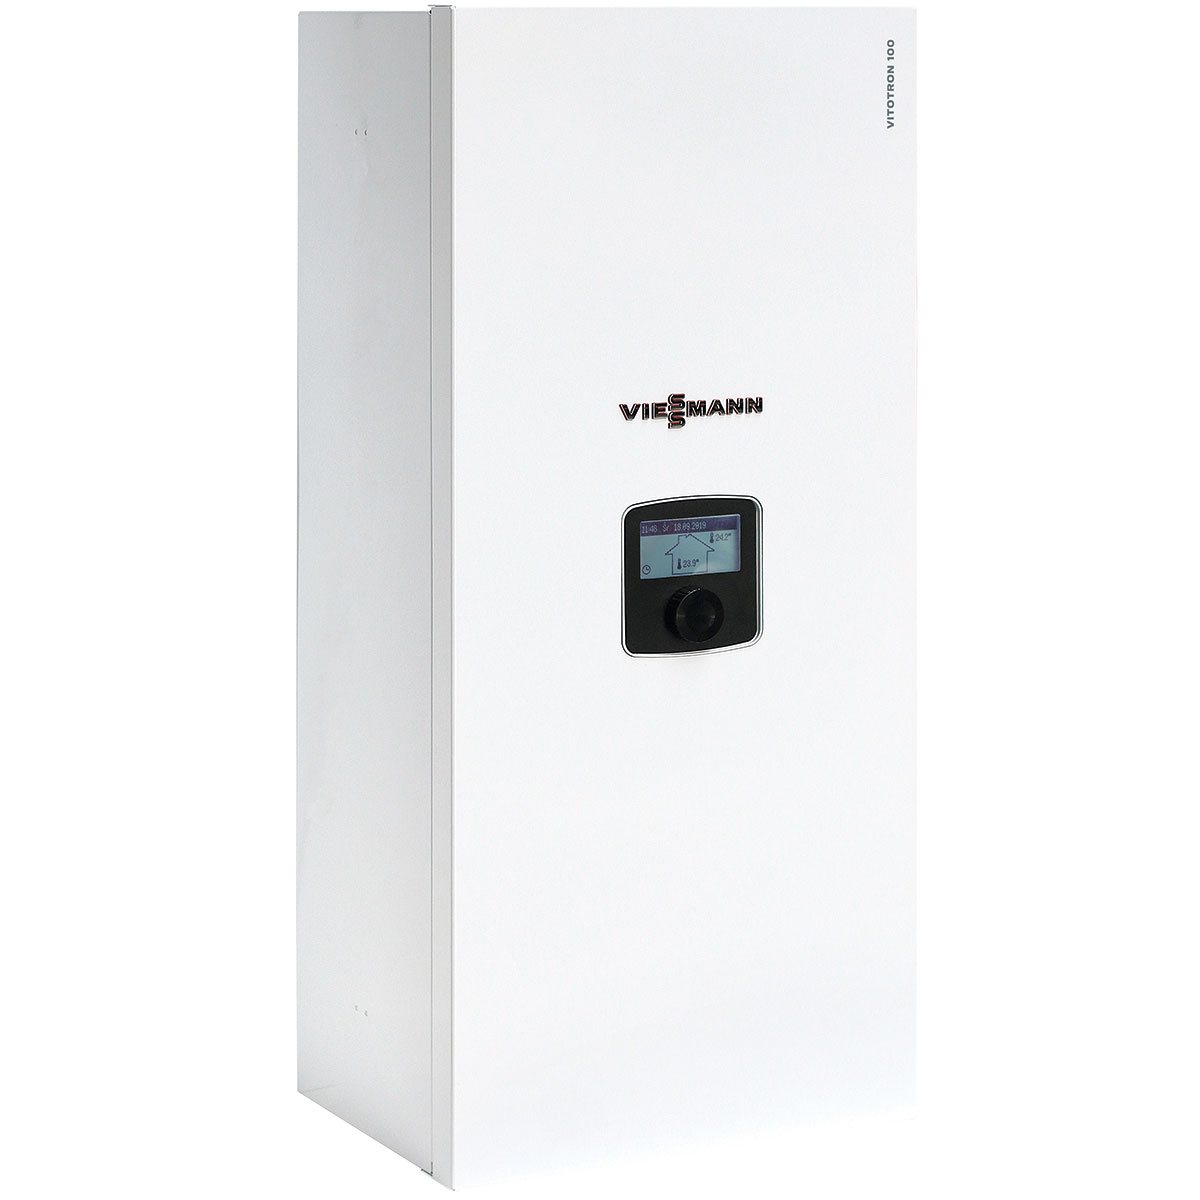 Viessmann Vitotron 100 VMN3-24 400V, 24,0 kW, Z020840